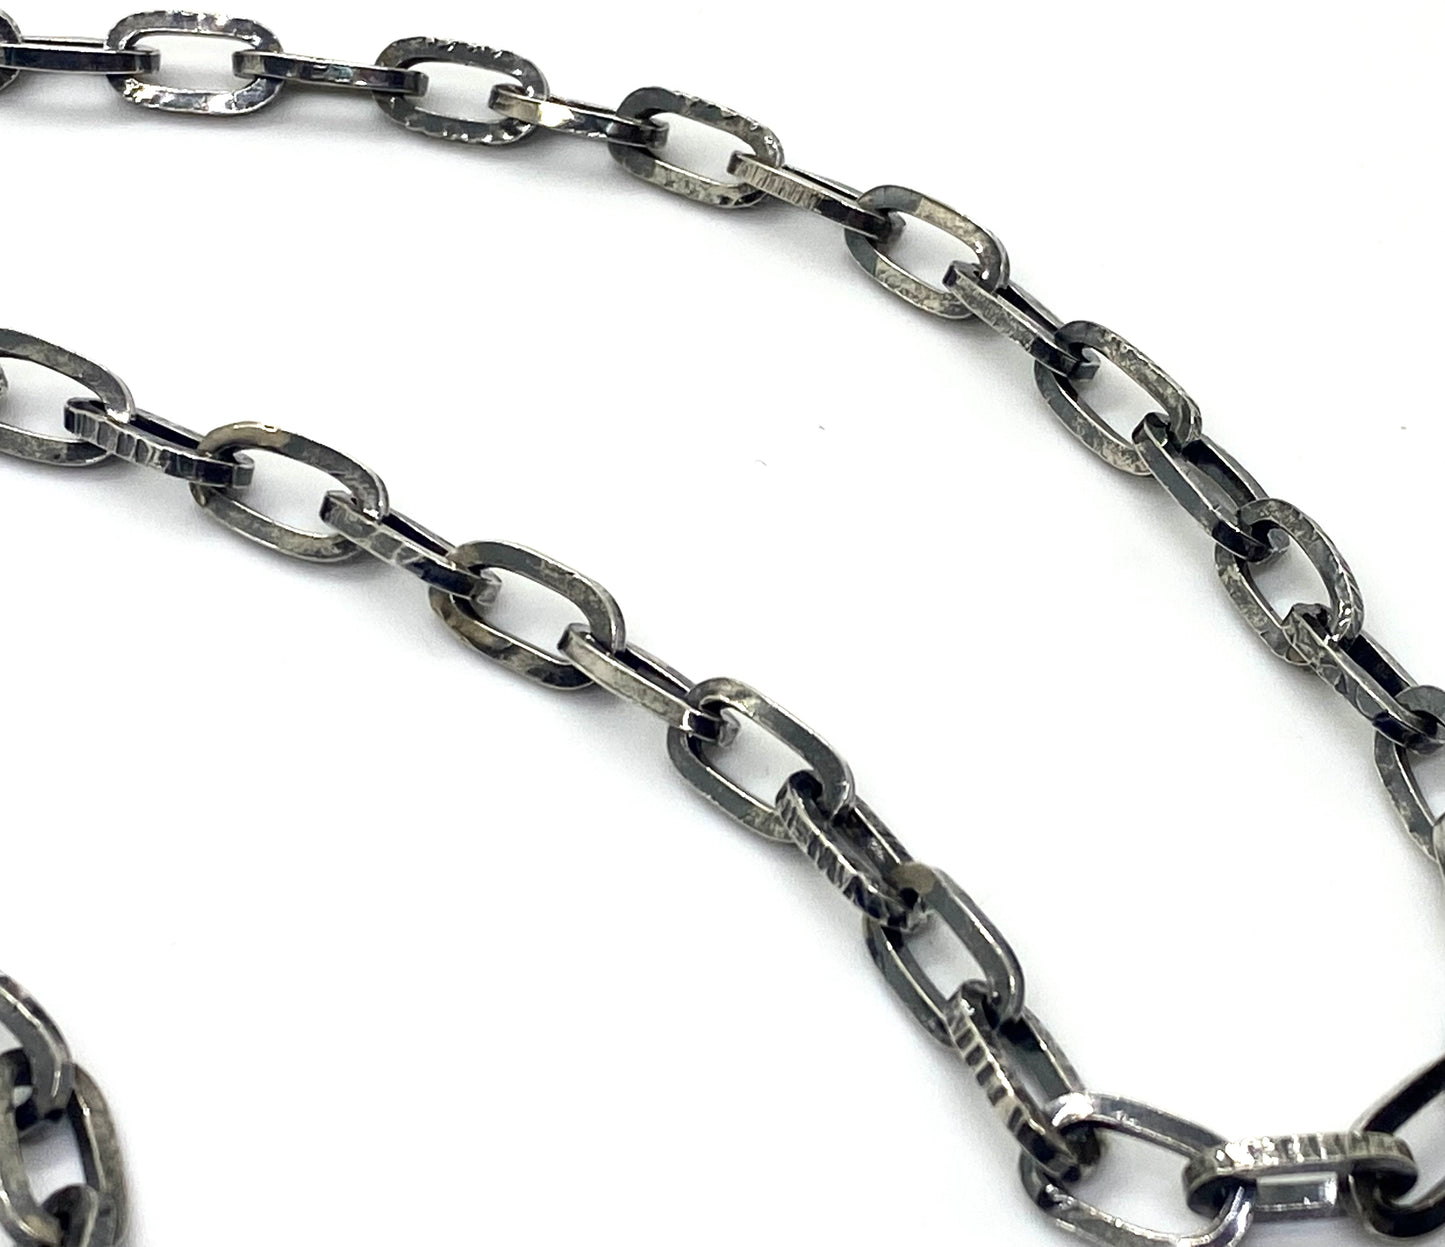 Handmade Chain small links, hammered links 24.5"